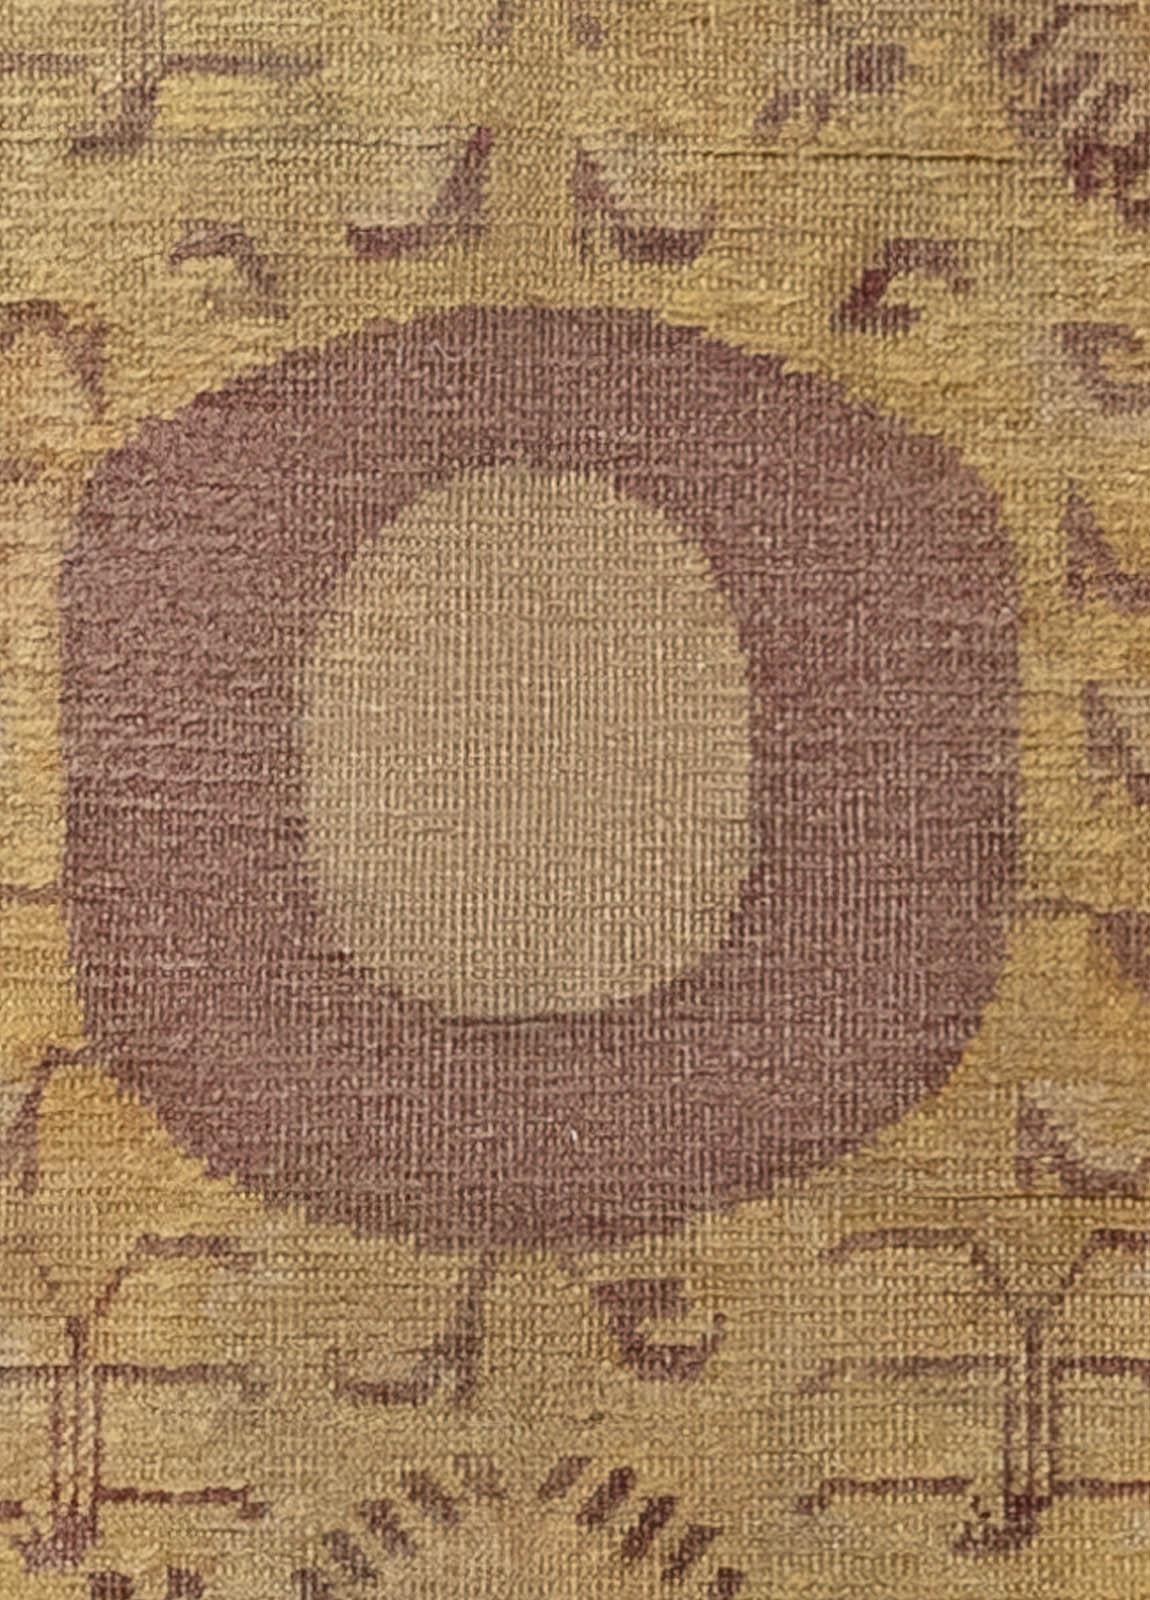 1900s Samarkand 'Khotan' yellow and brown handmade wool rug
Size: 4'6